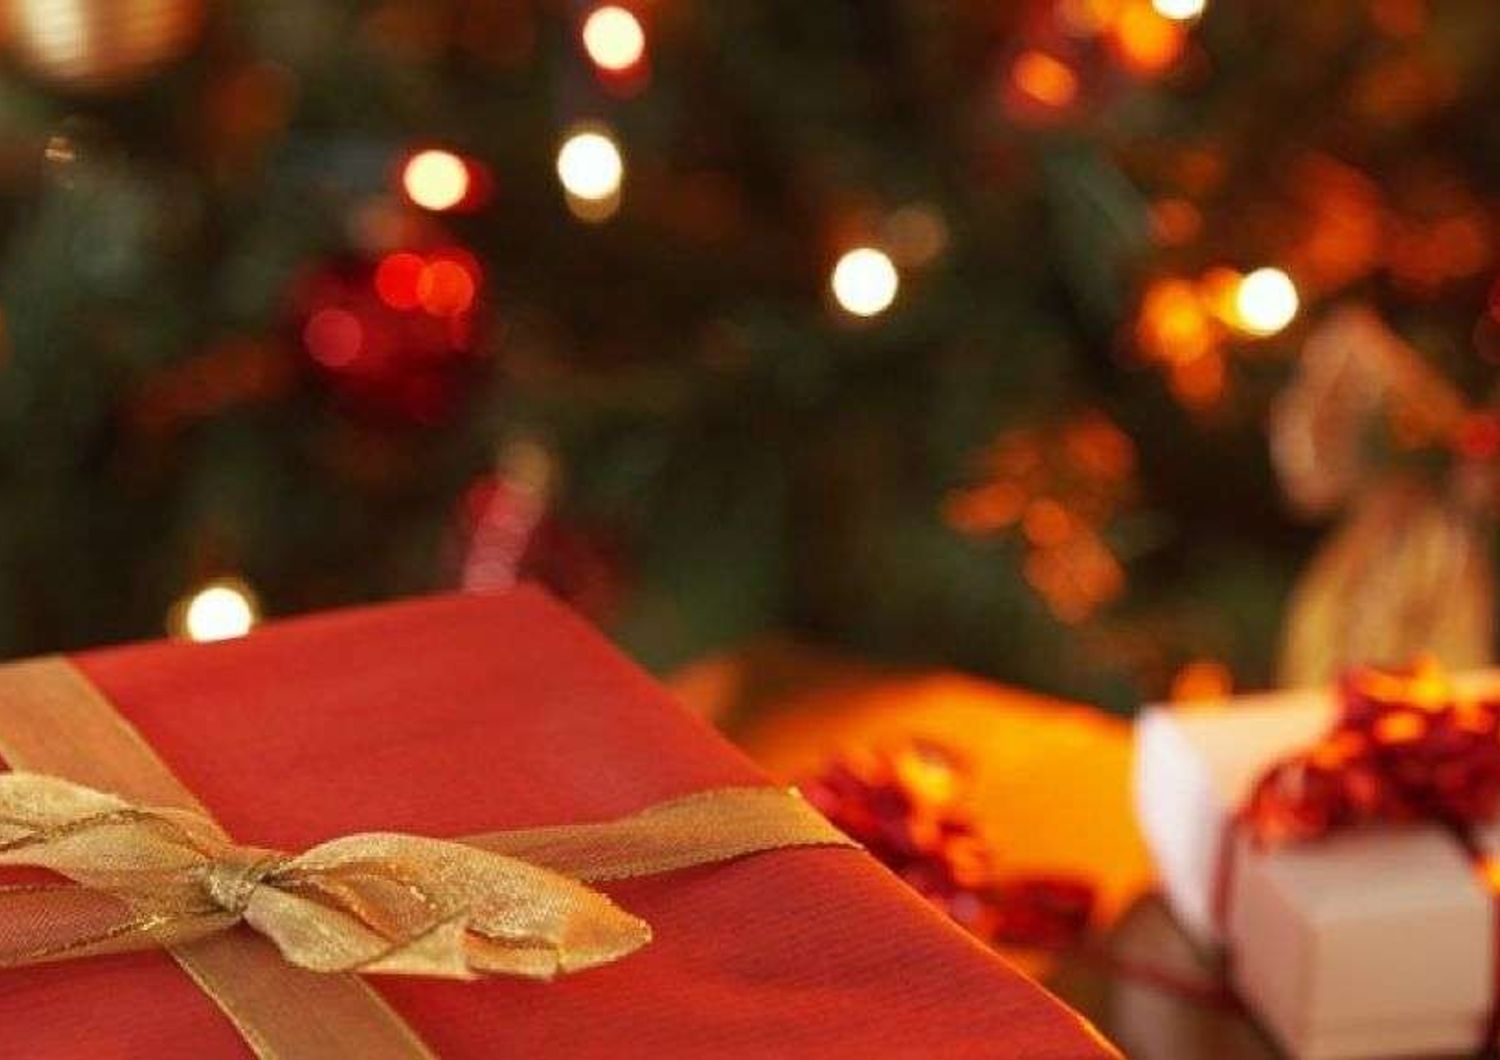 Natale: Confcommercio, spesa regali giu' a 171 euro(-40% in 5 anni)